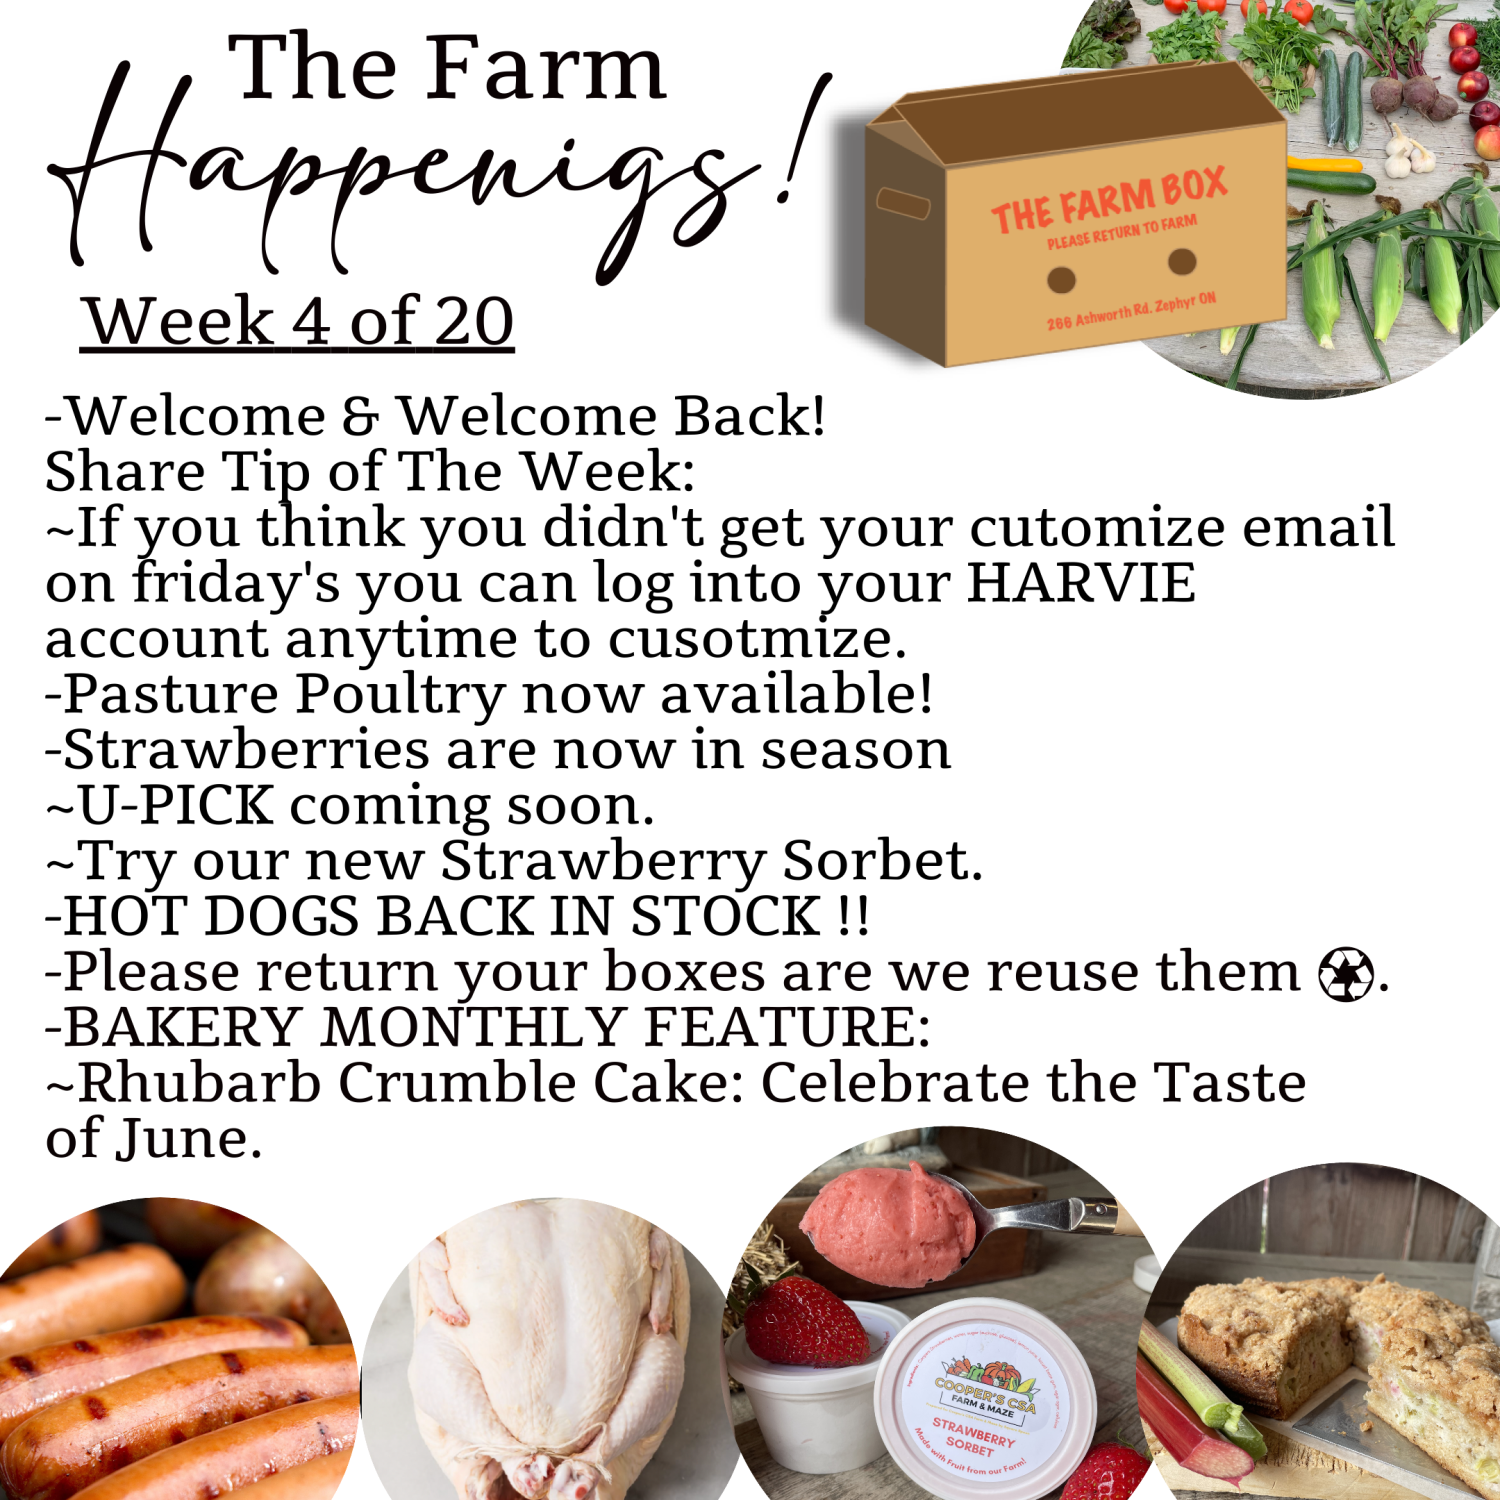 Next Happening: "The Farm Box"-Coopers CSA Farm Farm Happenings Week 4 of 20